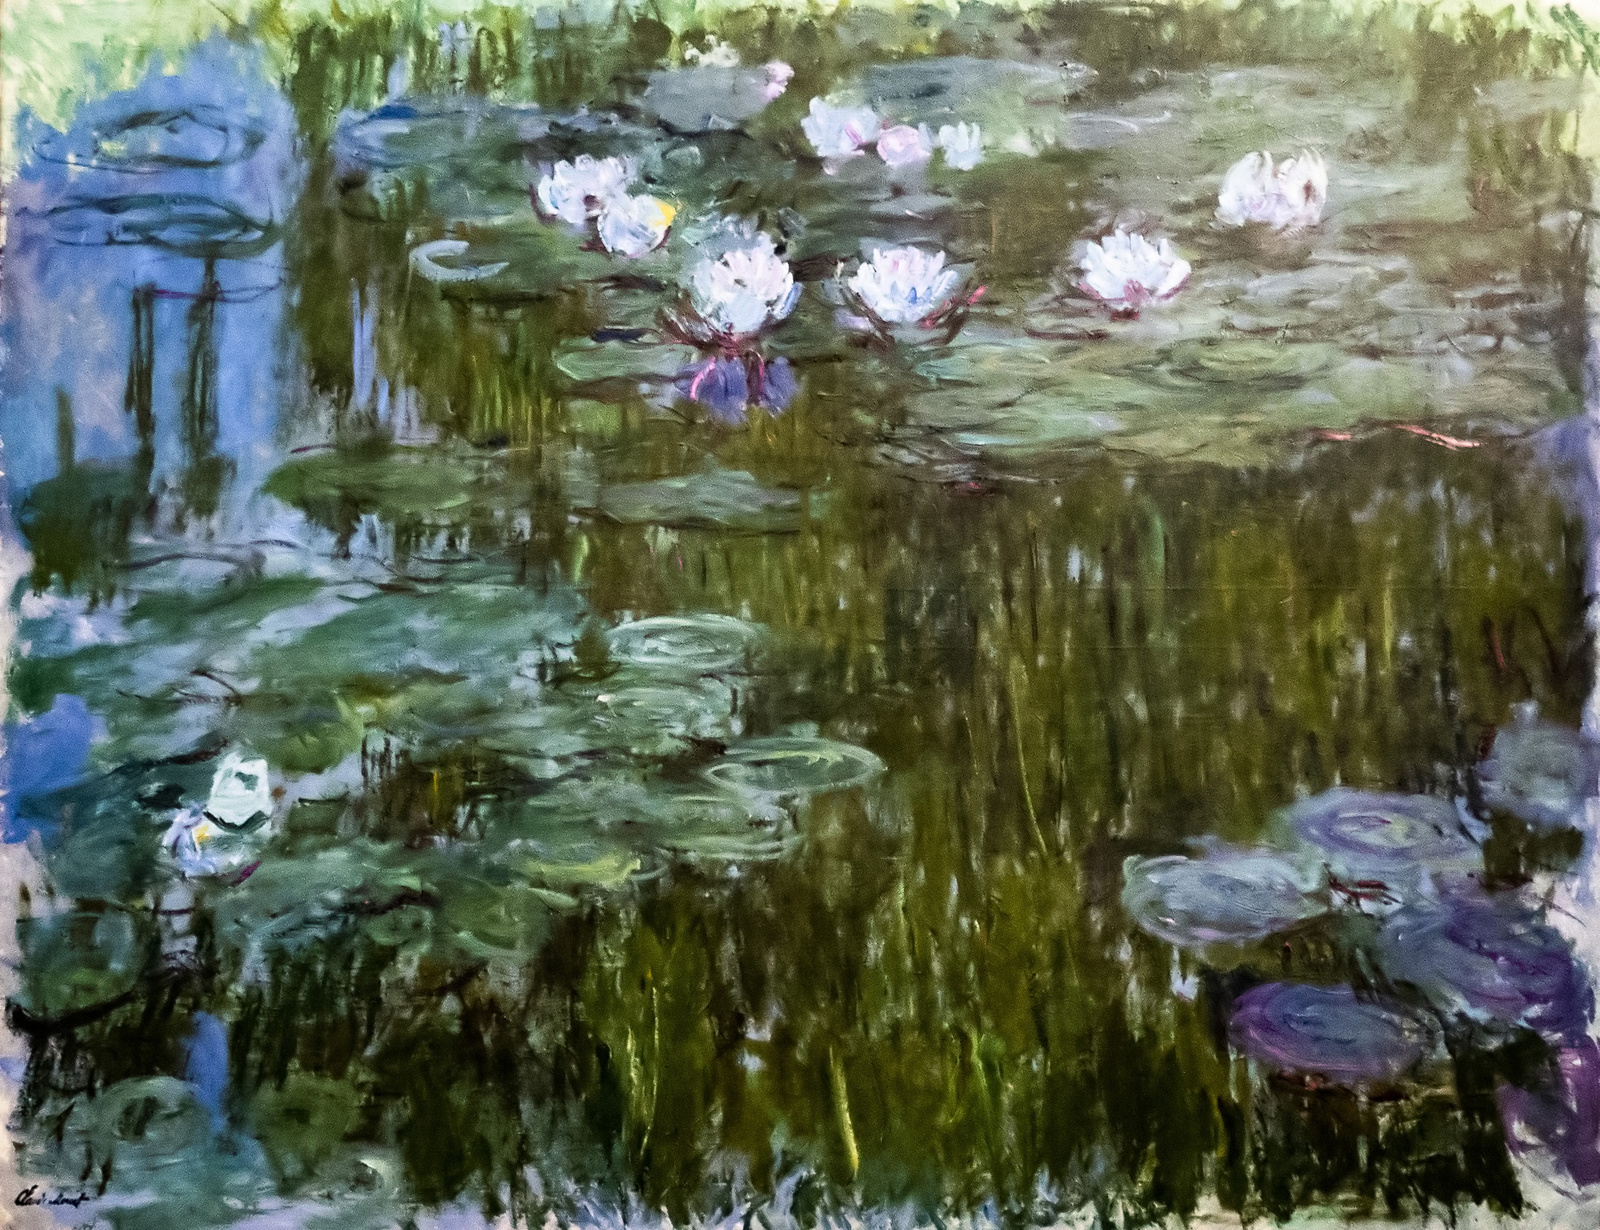 Bécs Claude Monet - Water lilies (1914-1917)